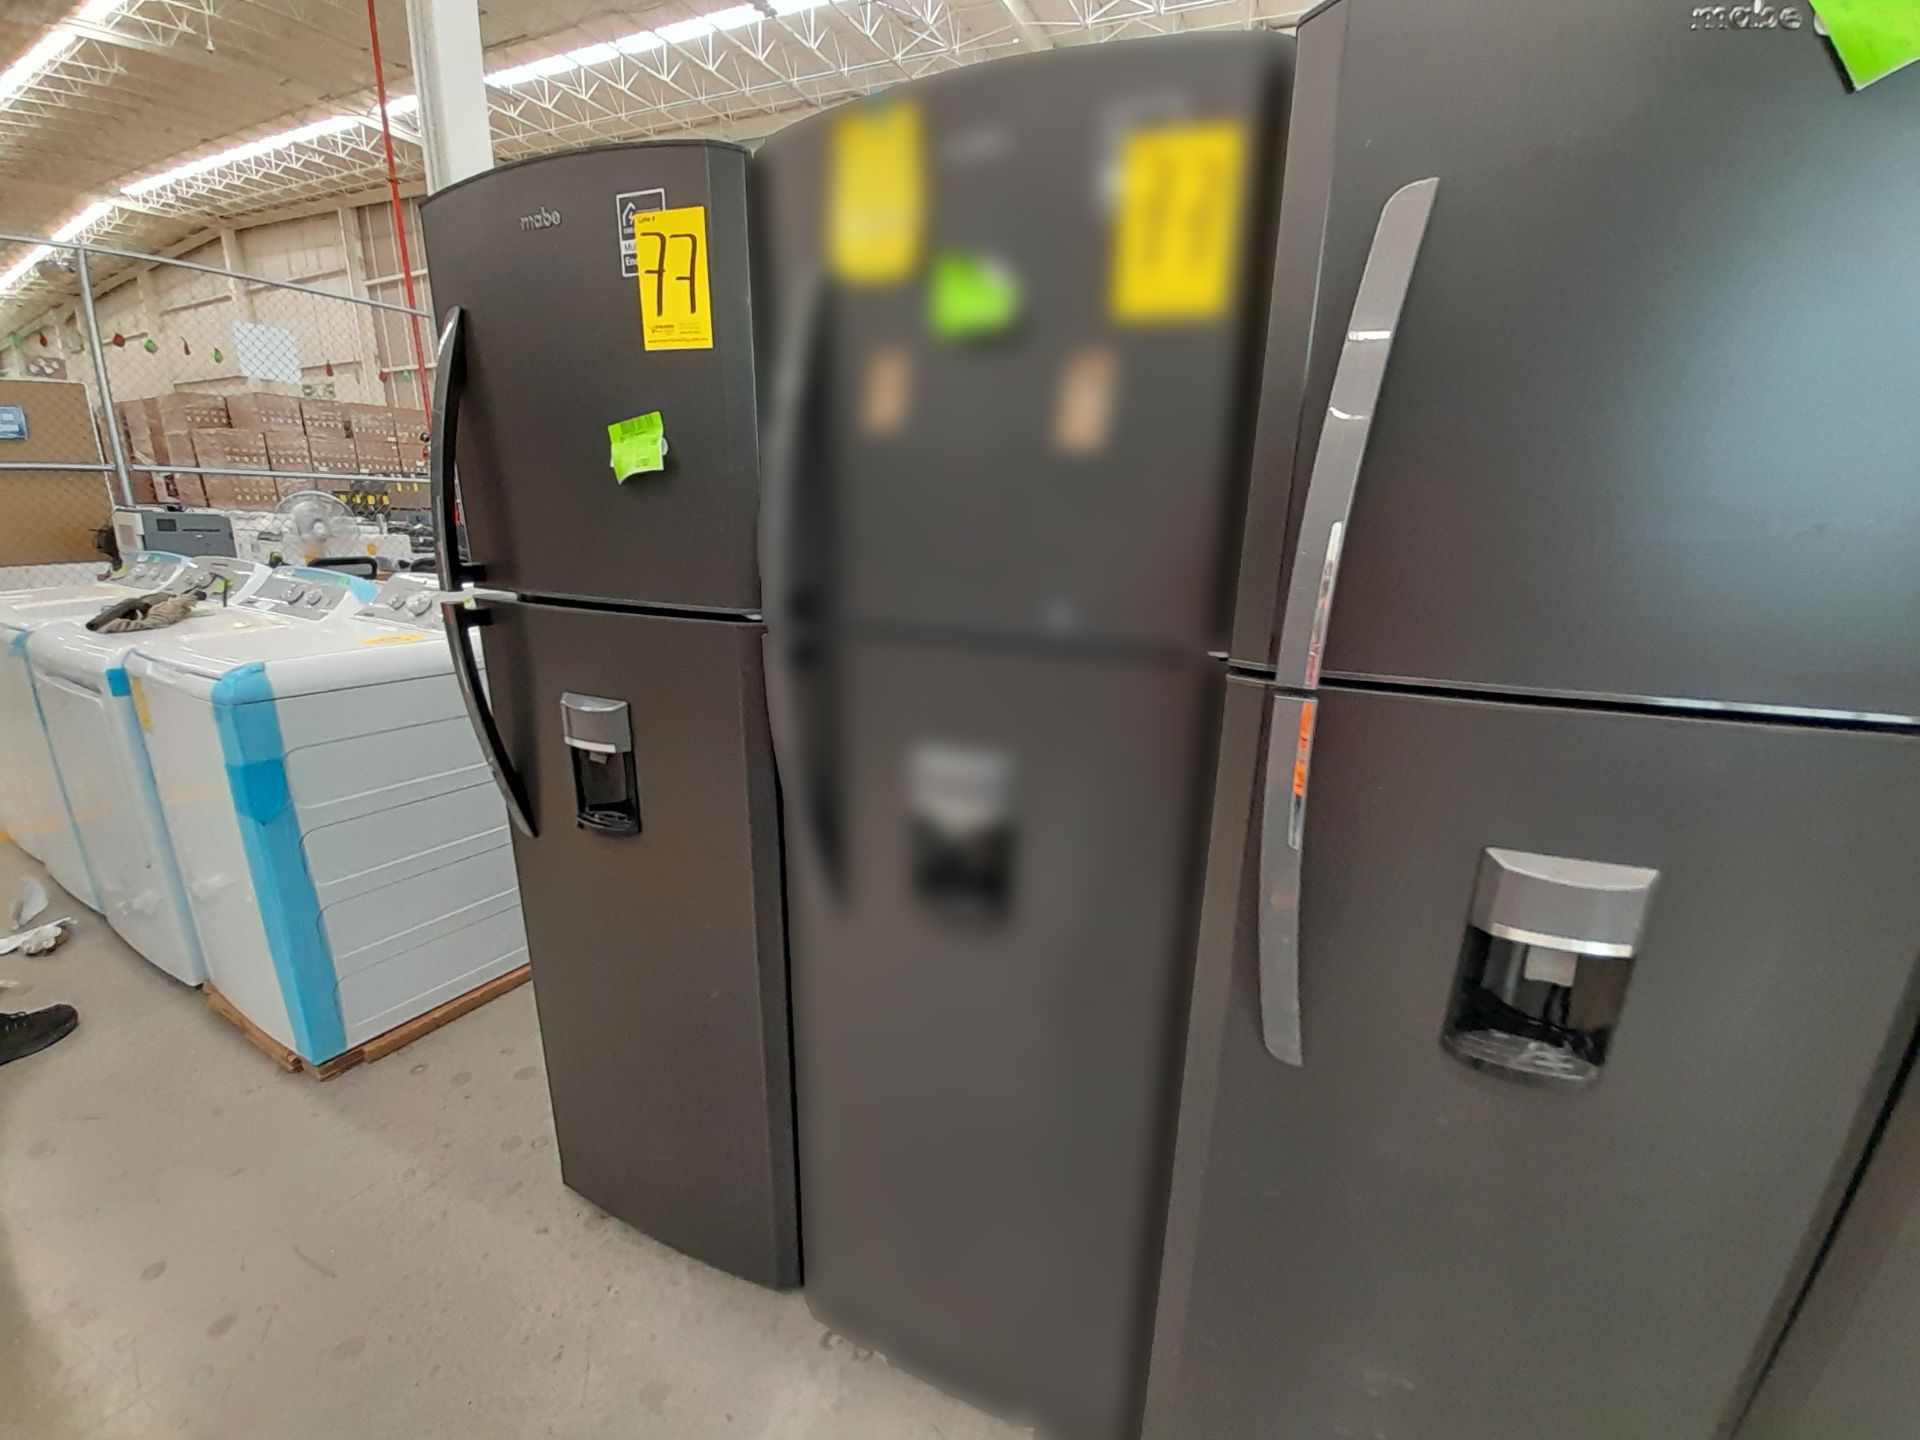 Lote de 1 Refrigerador con dispensador de agua Marca MABE, Modelo RMA300FJ, Color GRIS (No se asegu - Image 3 of 4